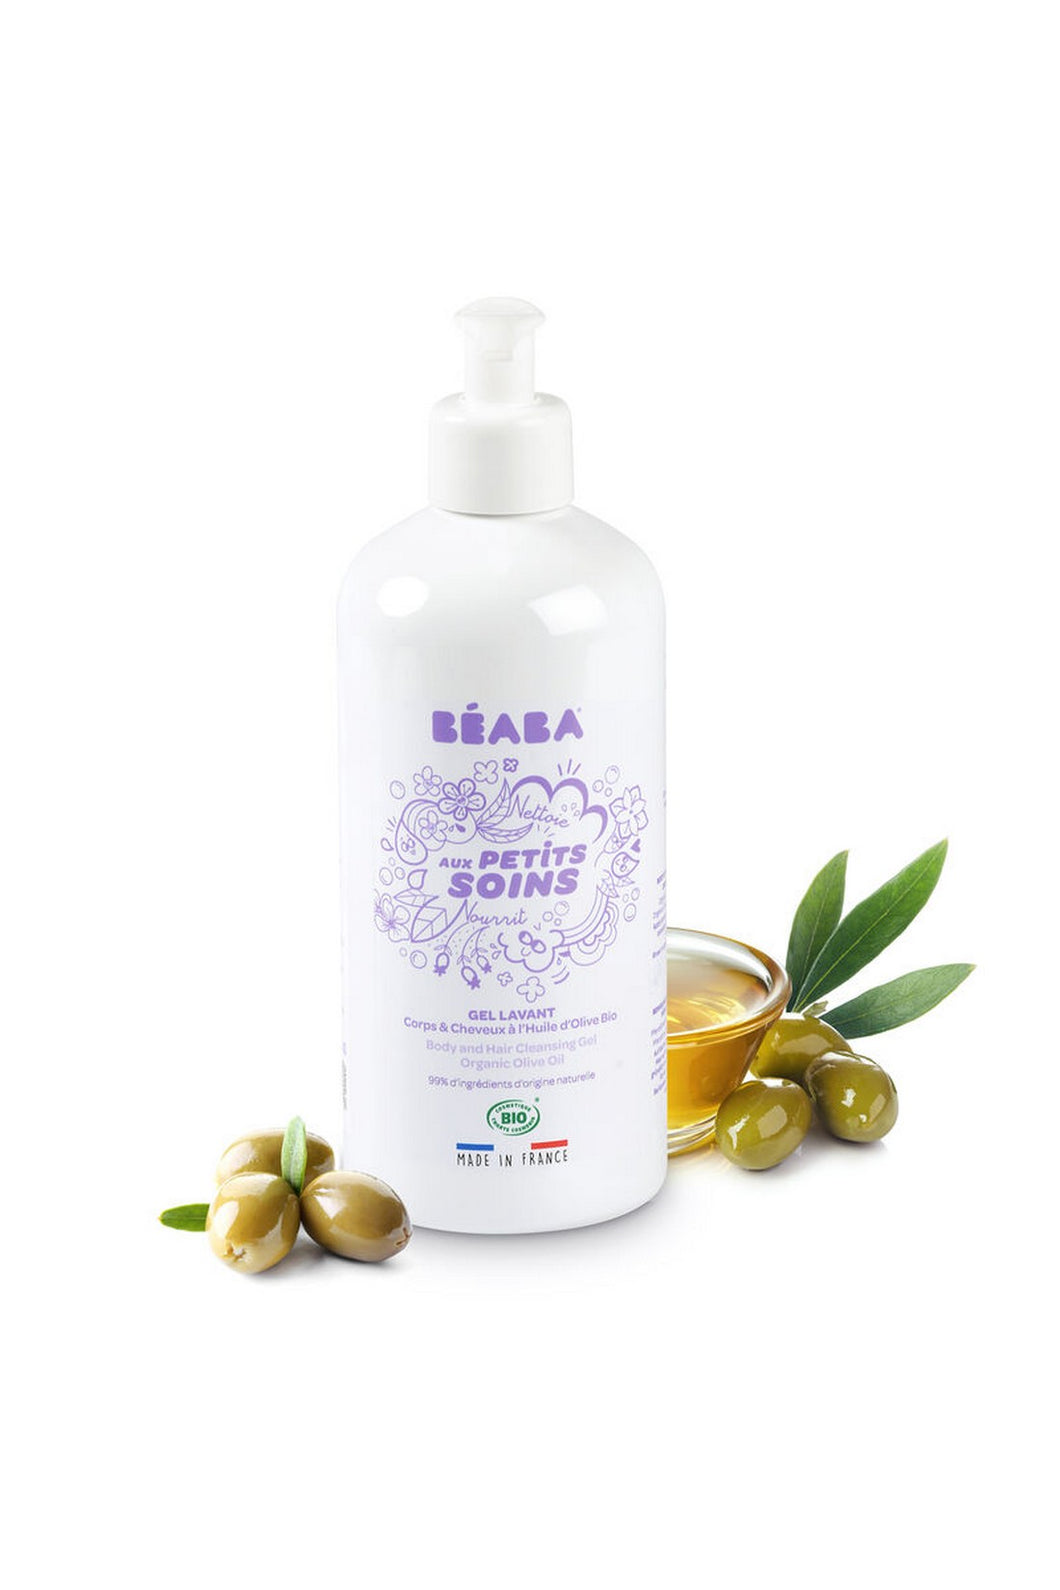 Beaba Certified Organic Cleansing Gel  500ml 1